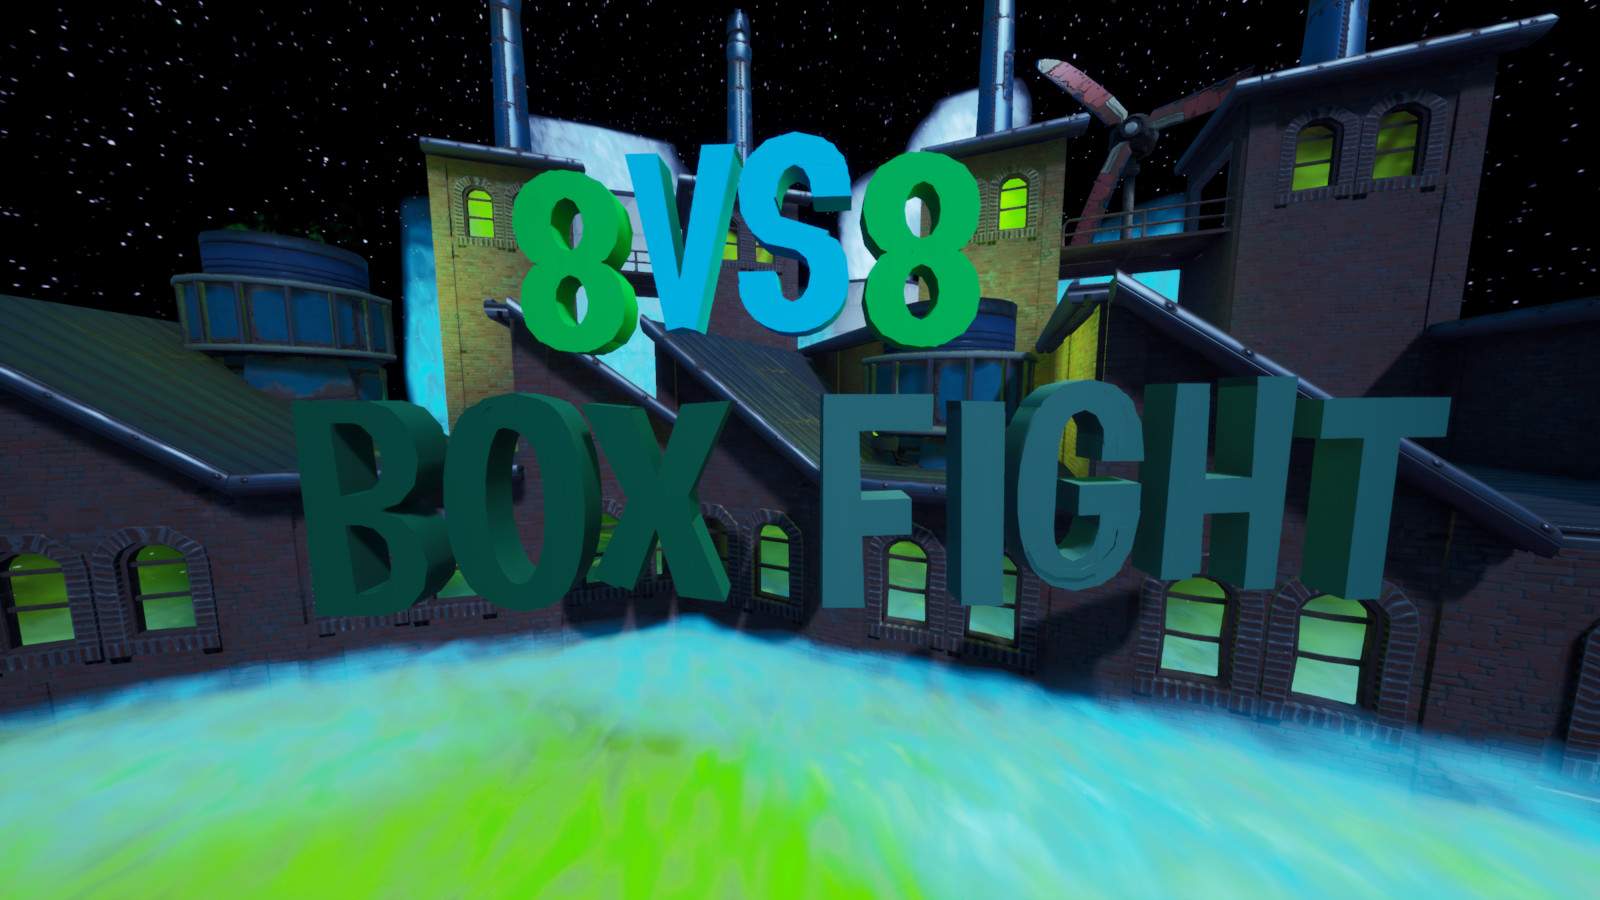 8 VS 8 {|} DARK CITY  {|} BOX FIGHT